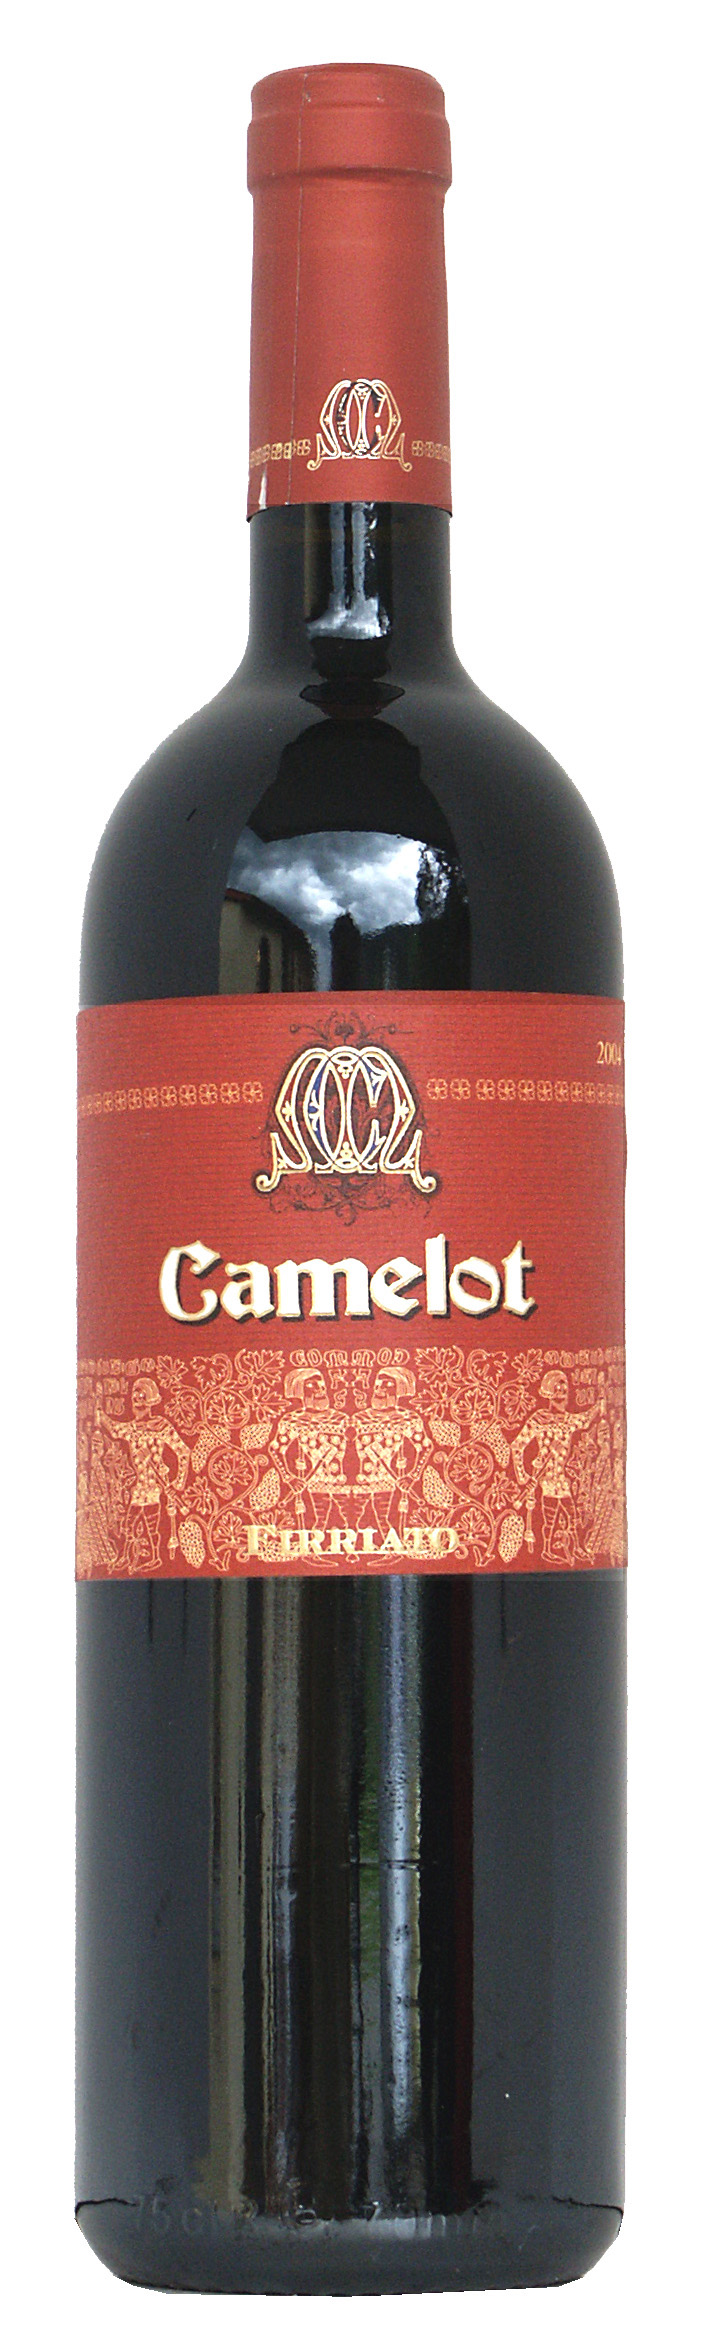 Sicilia rosso "Camelot" IGT 2016